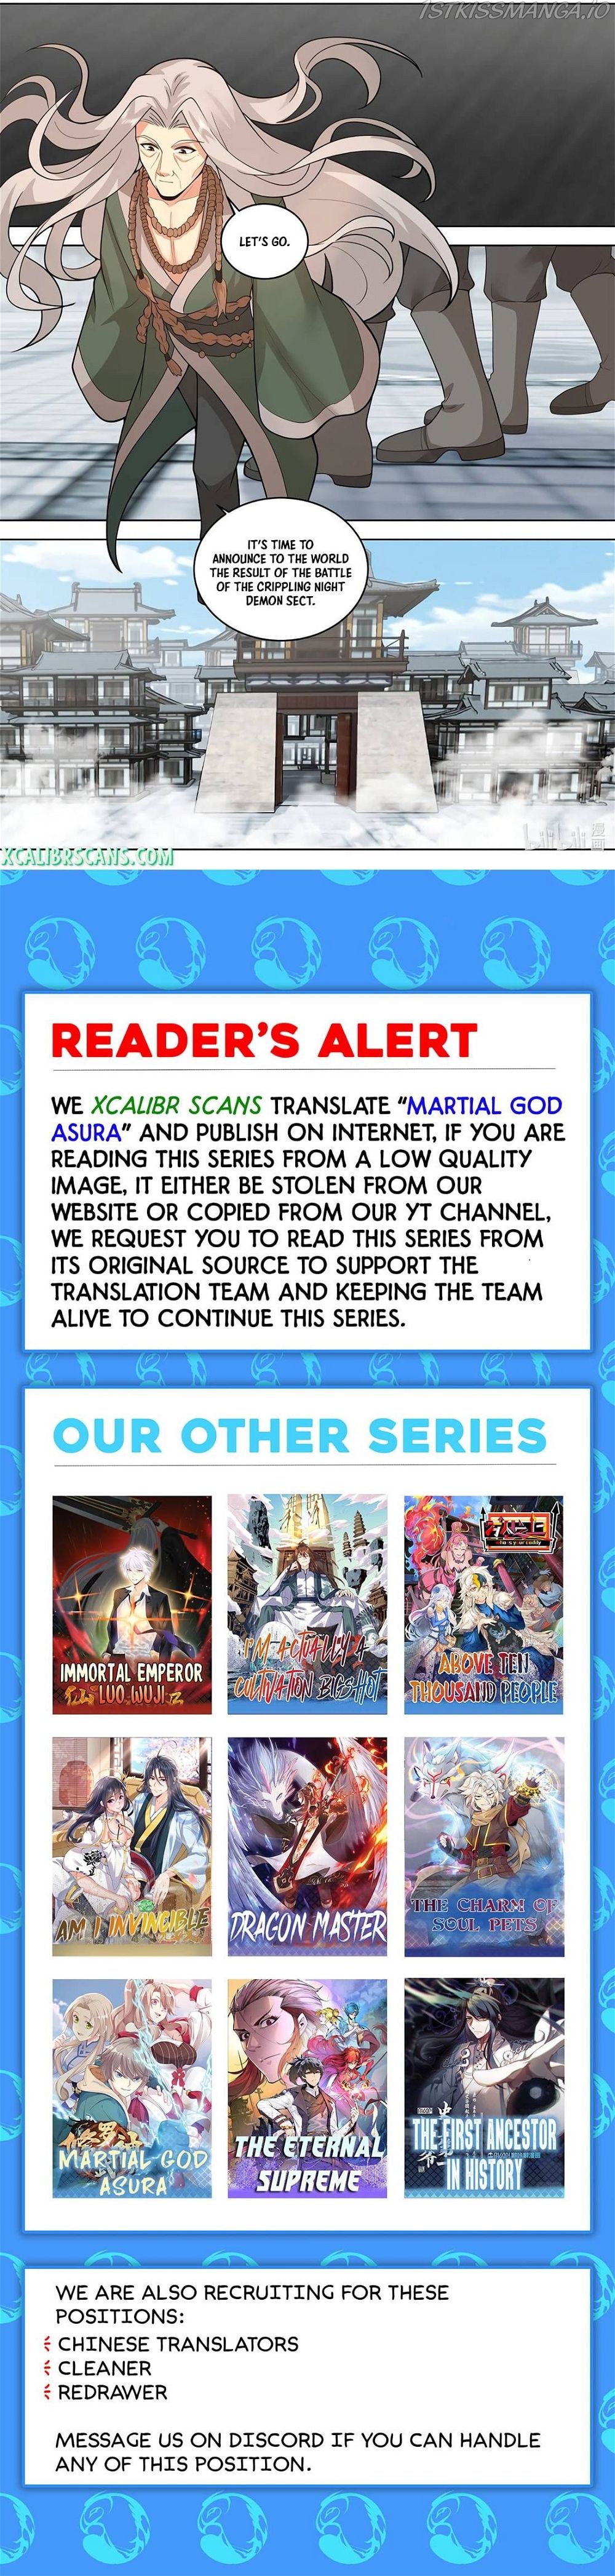 Martial God Asura Chapter 530 - Page 10